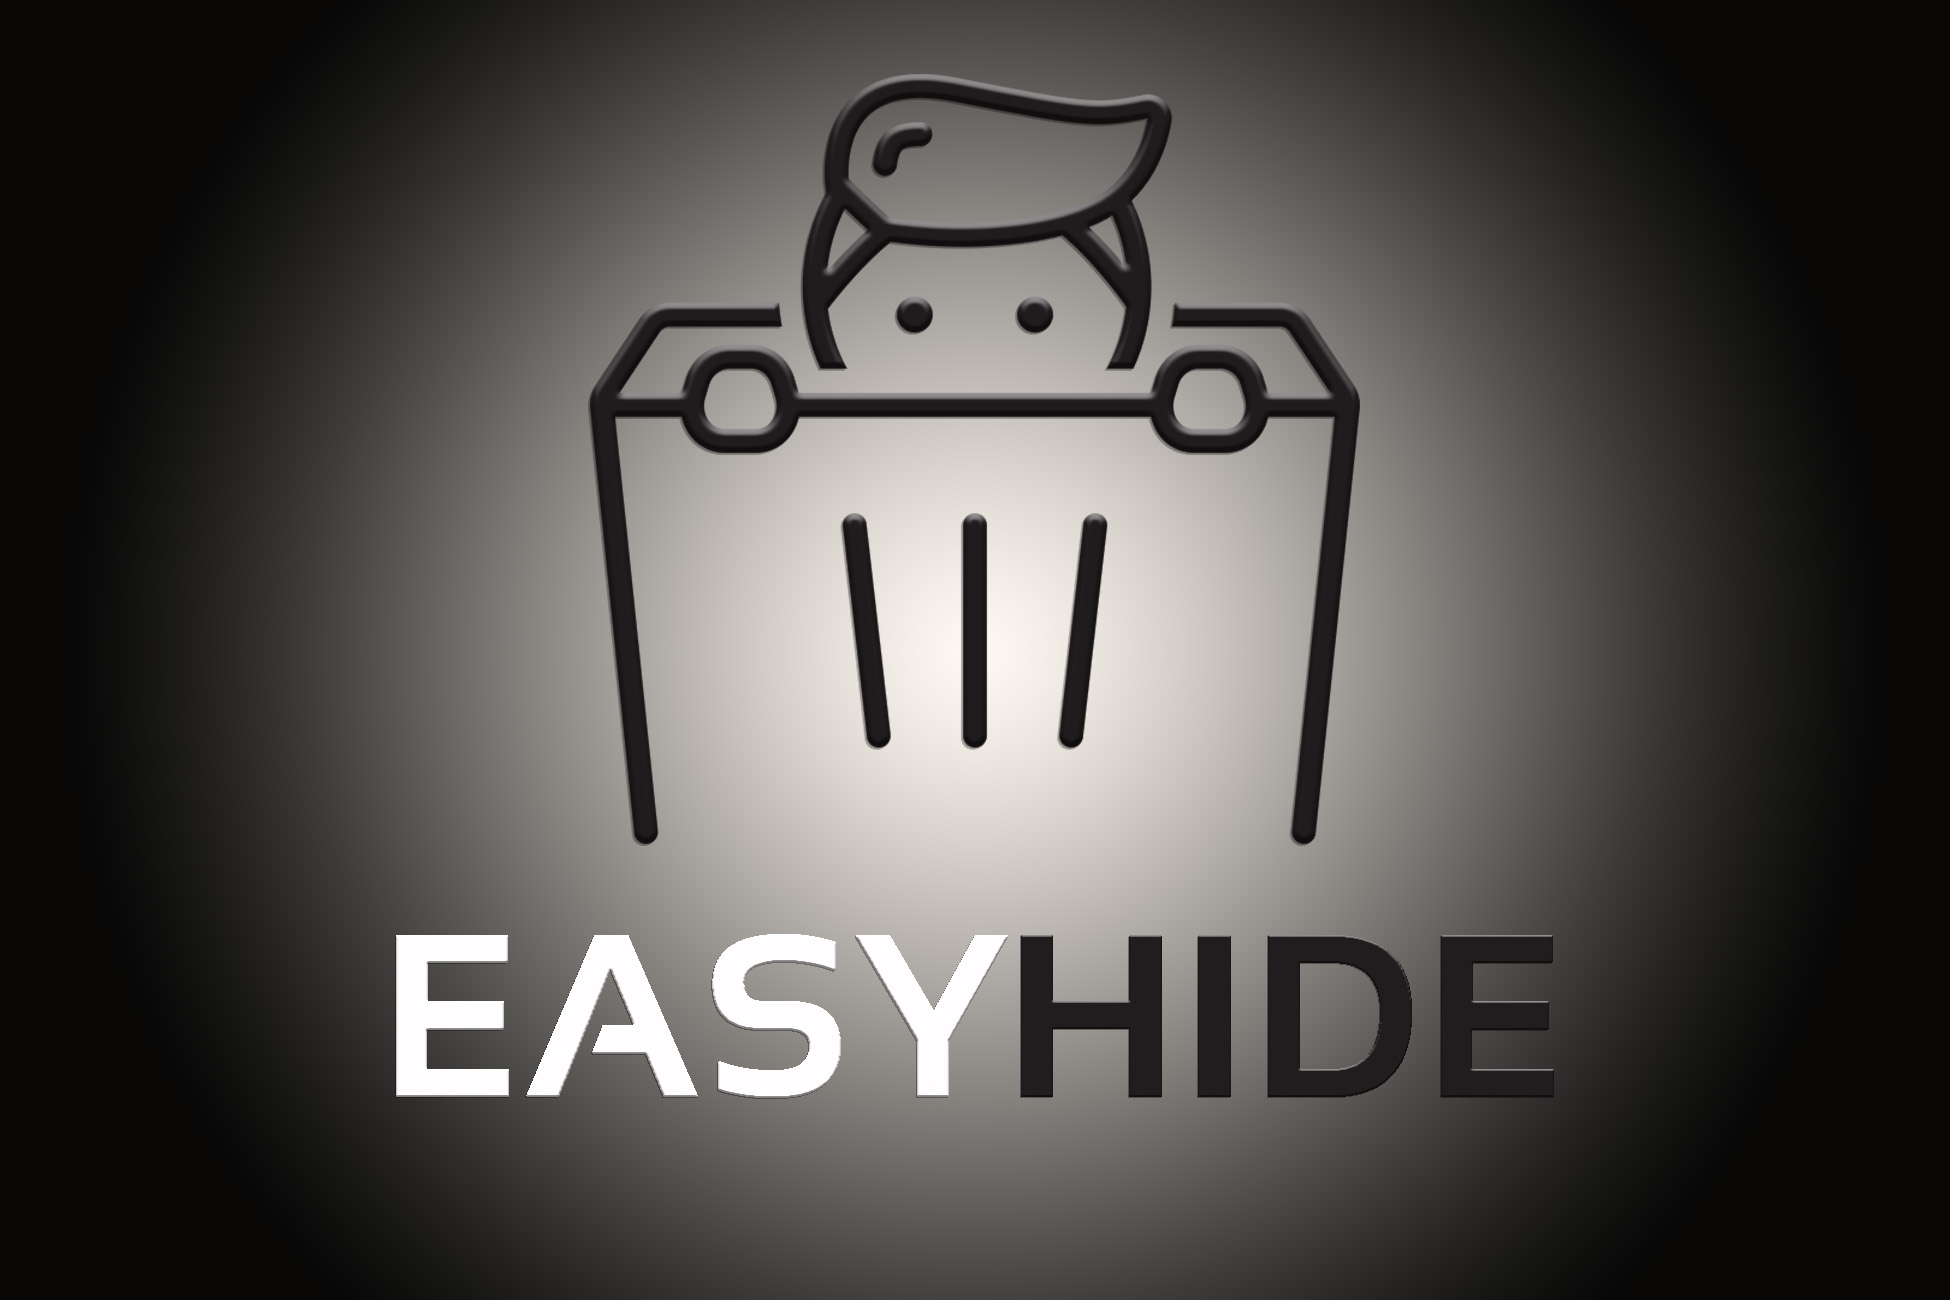 Easy Hide v0.6 Release